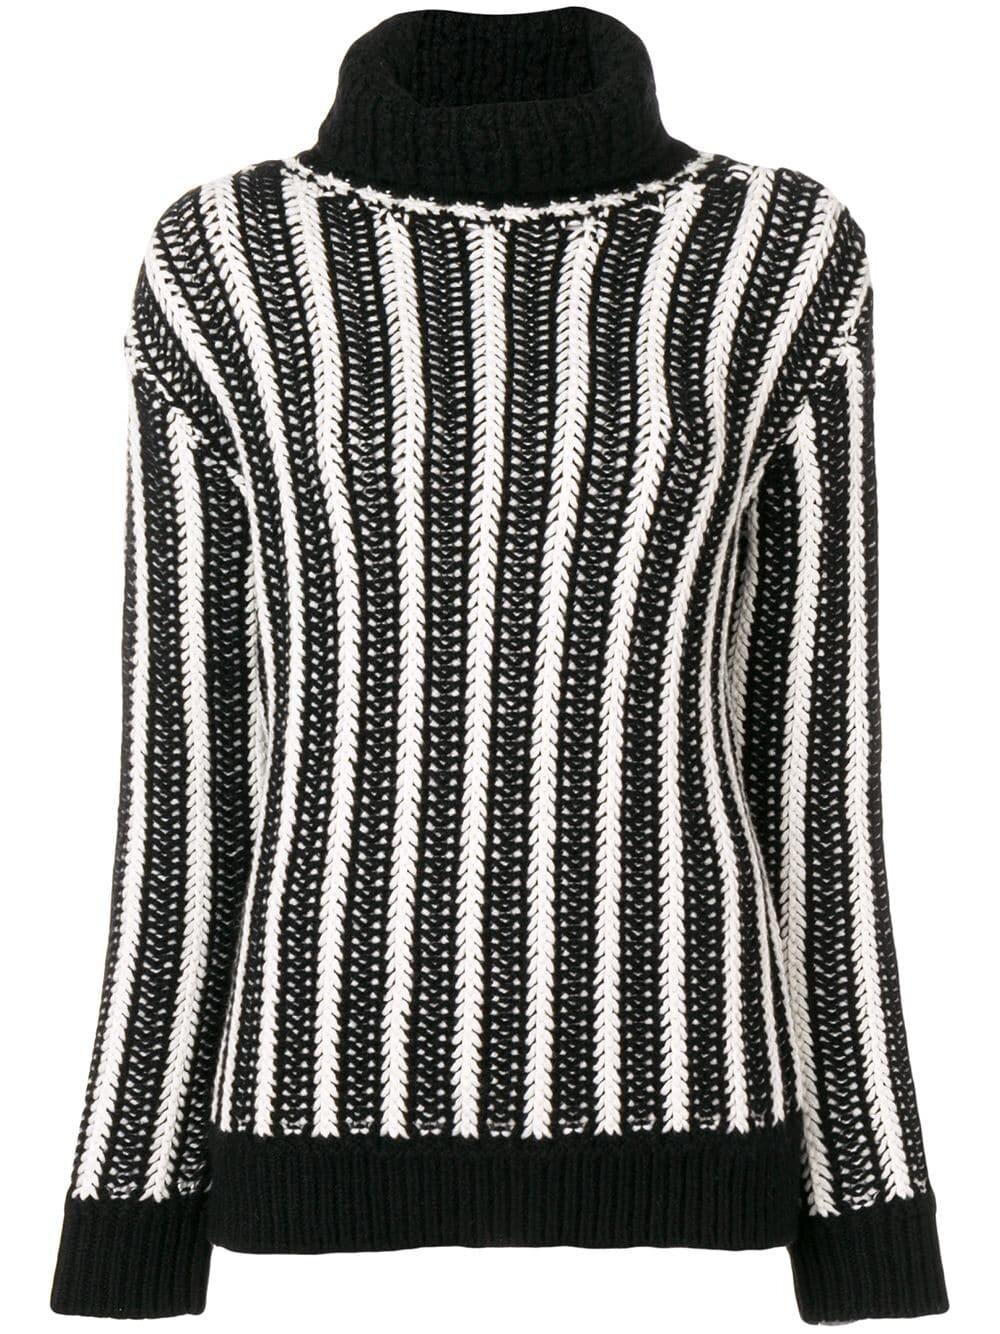 Saint Laurent Chevron Pattern Knitted Sweater.jpg